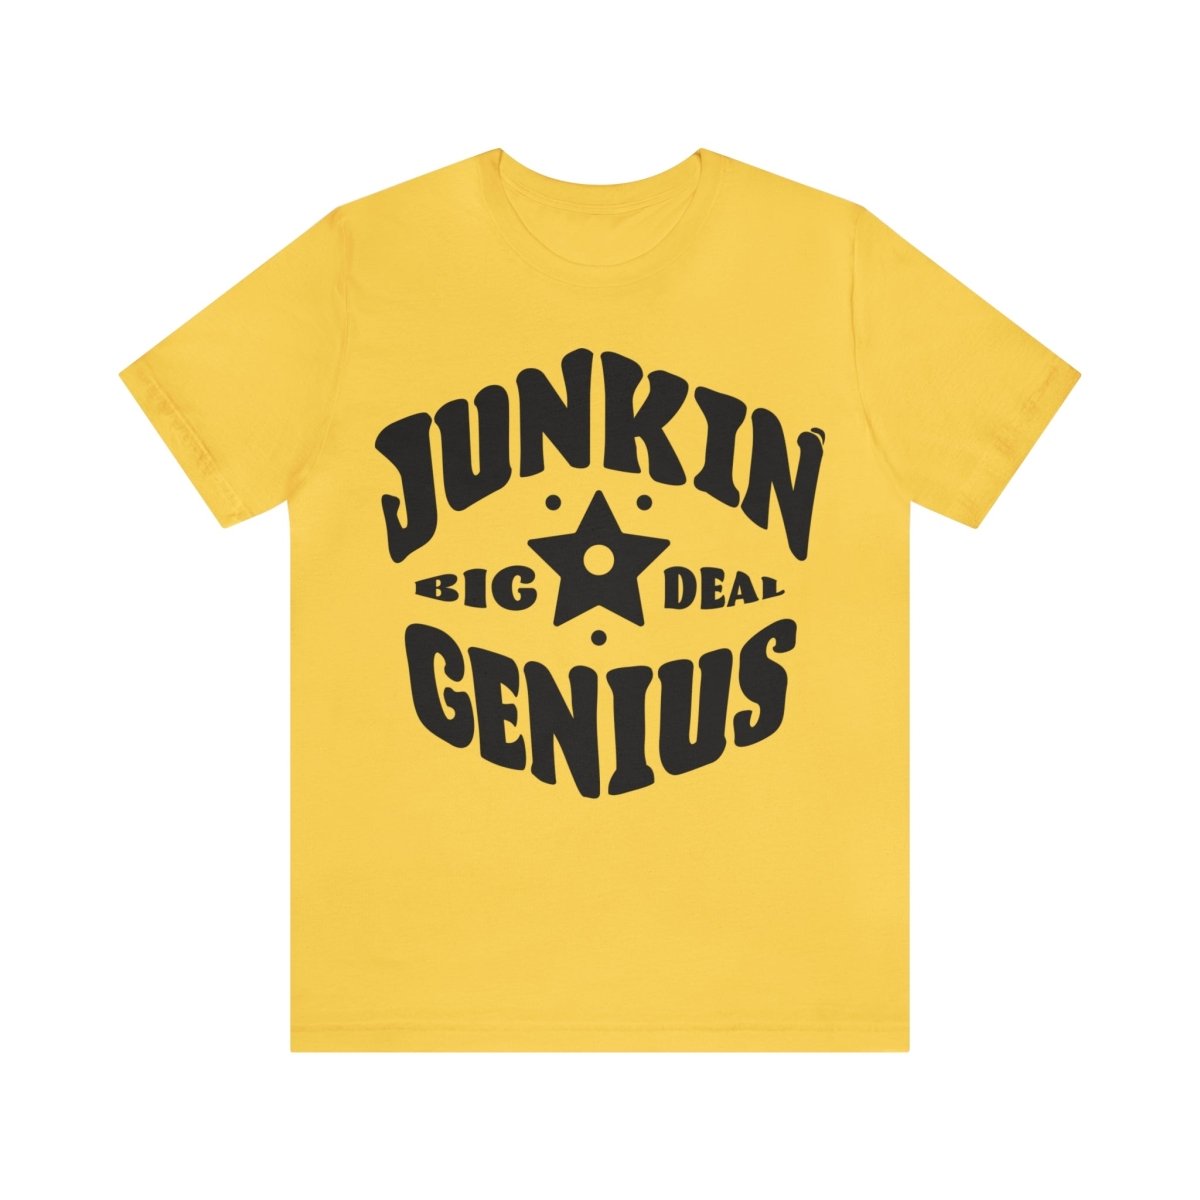 Junkin' Genius Premium T-Shirt, Antiques, Garage Sales, Estate Sales, Deal Shopper Gift